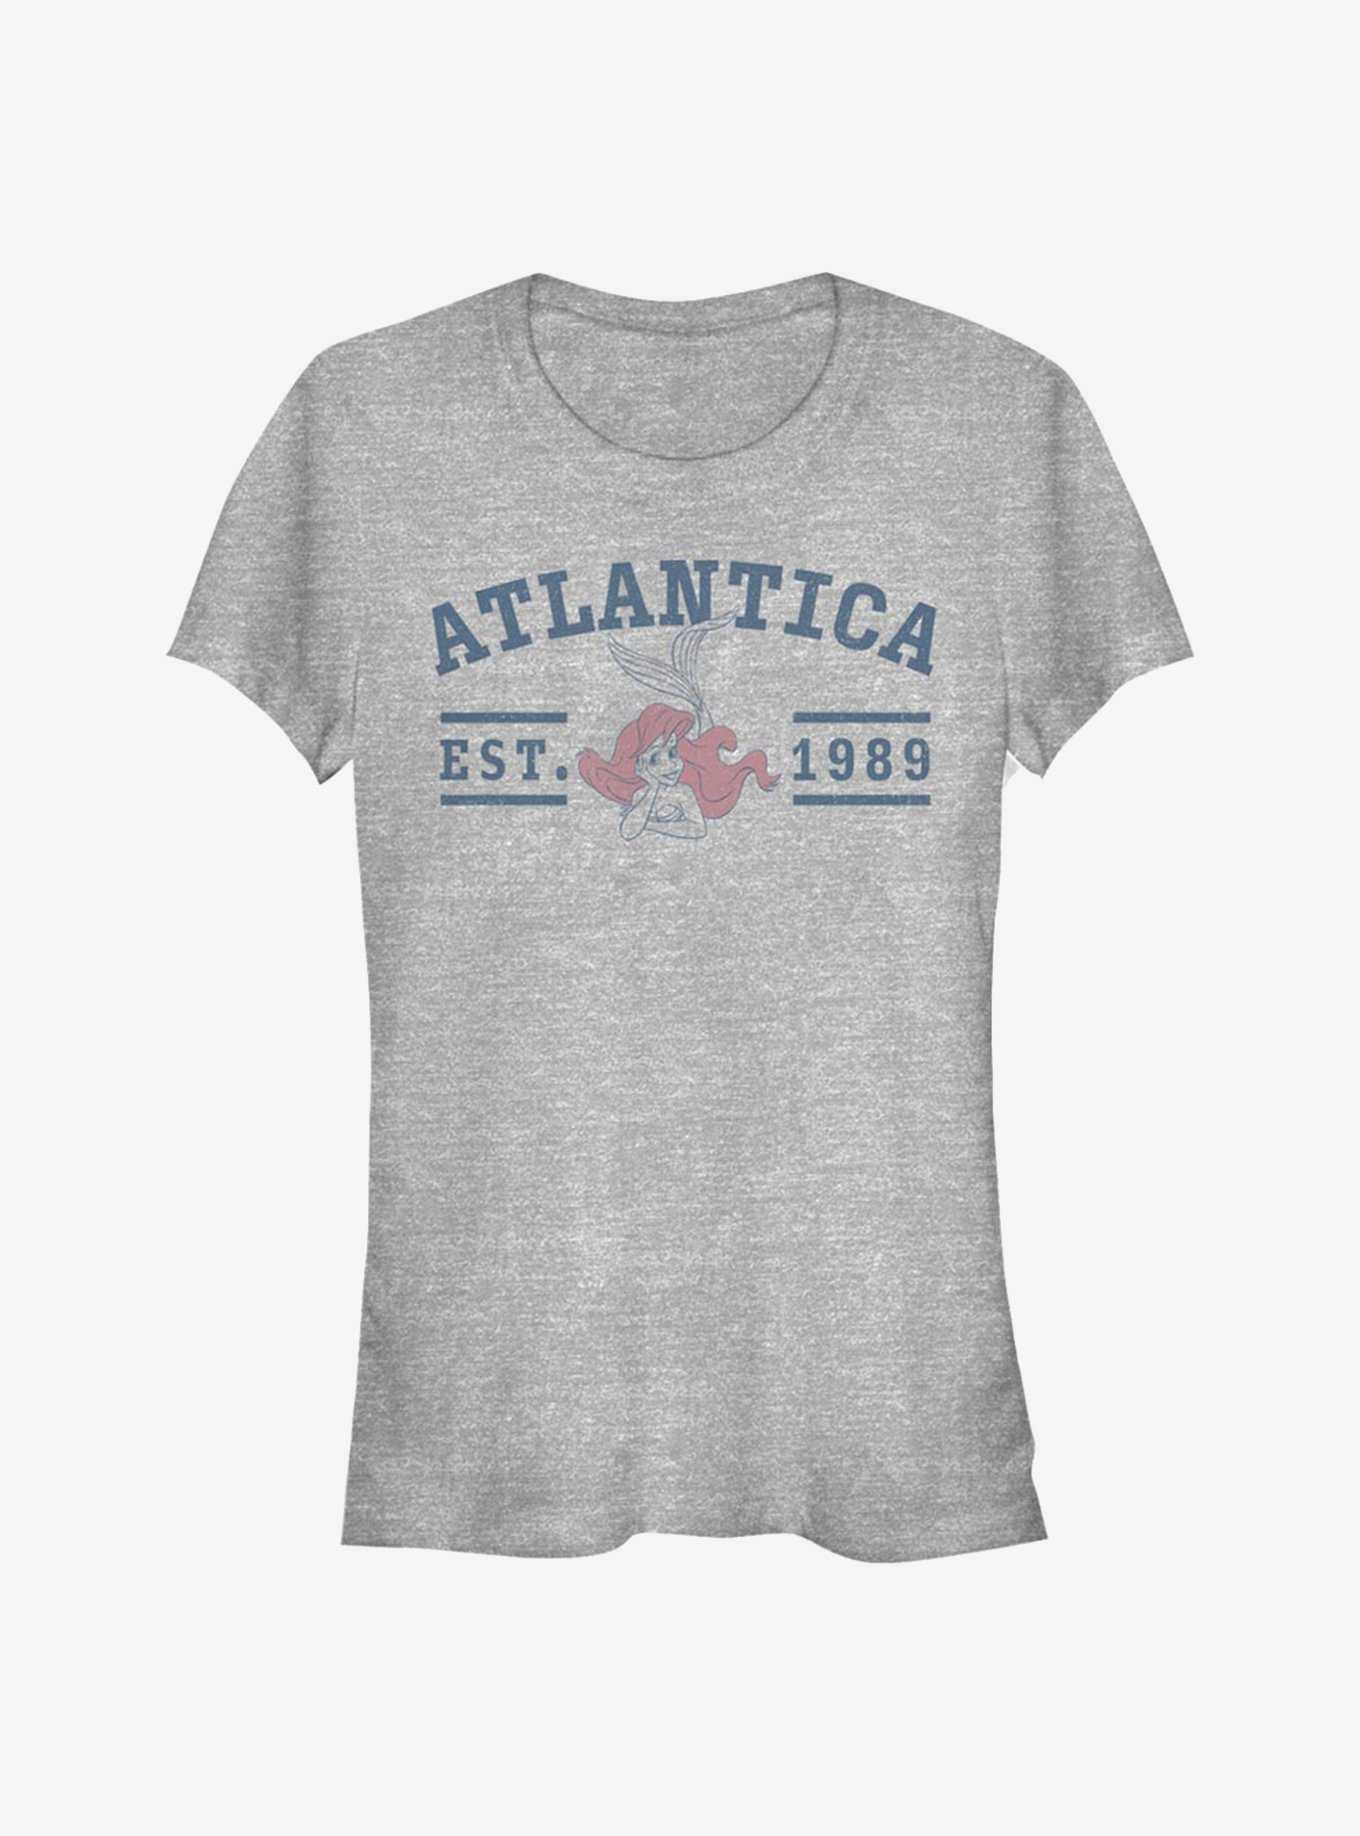 Disney The Little Mermaid Atlantica College Girls T-Shirt, , hi-res